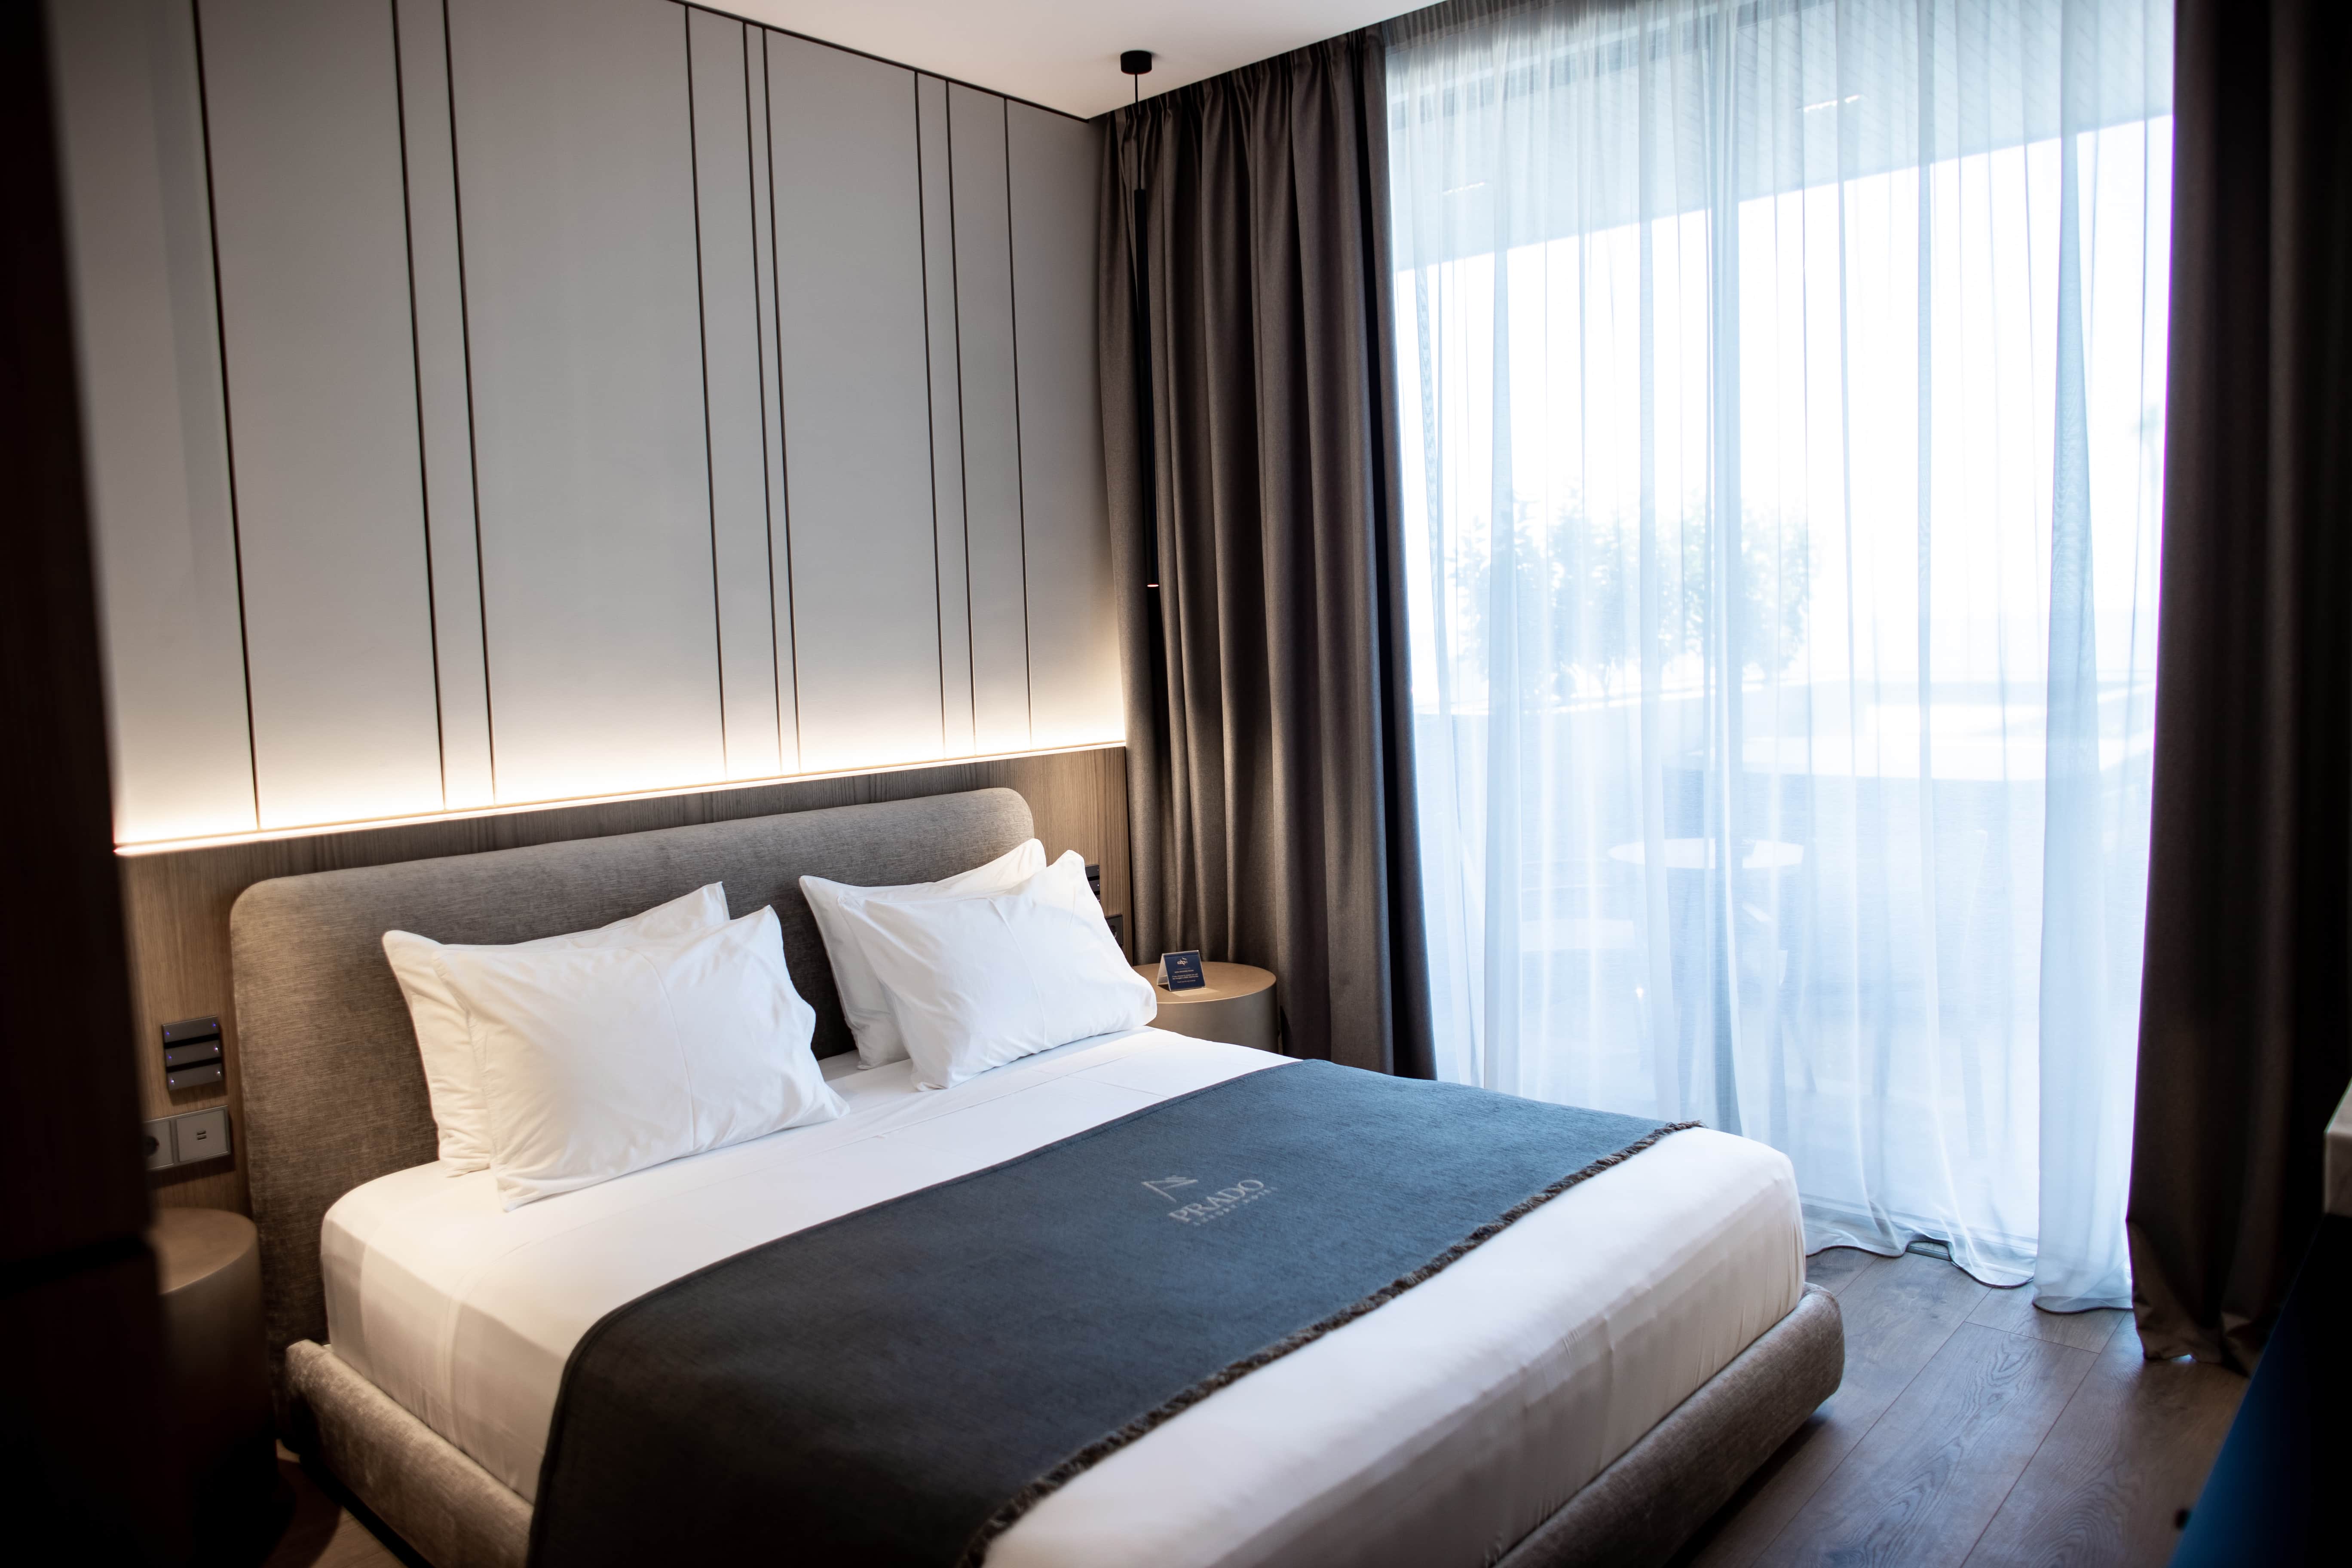 prado_luxury_hotel_room_standard_seaview_jacuzzi_bed_curtain